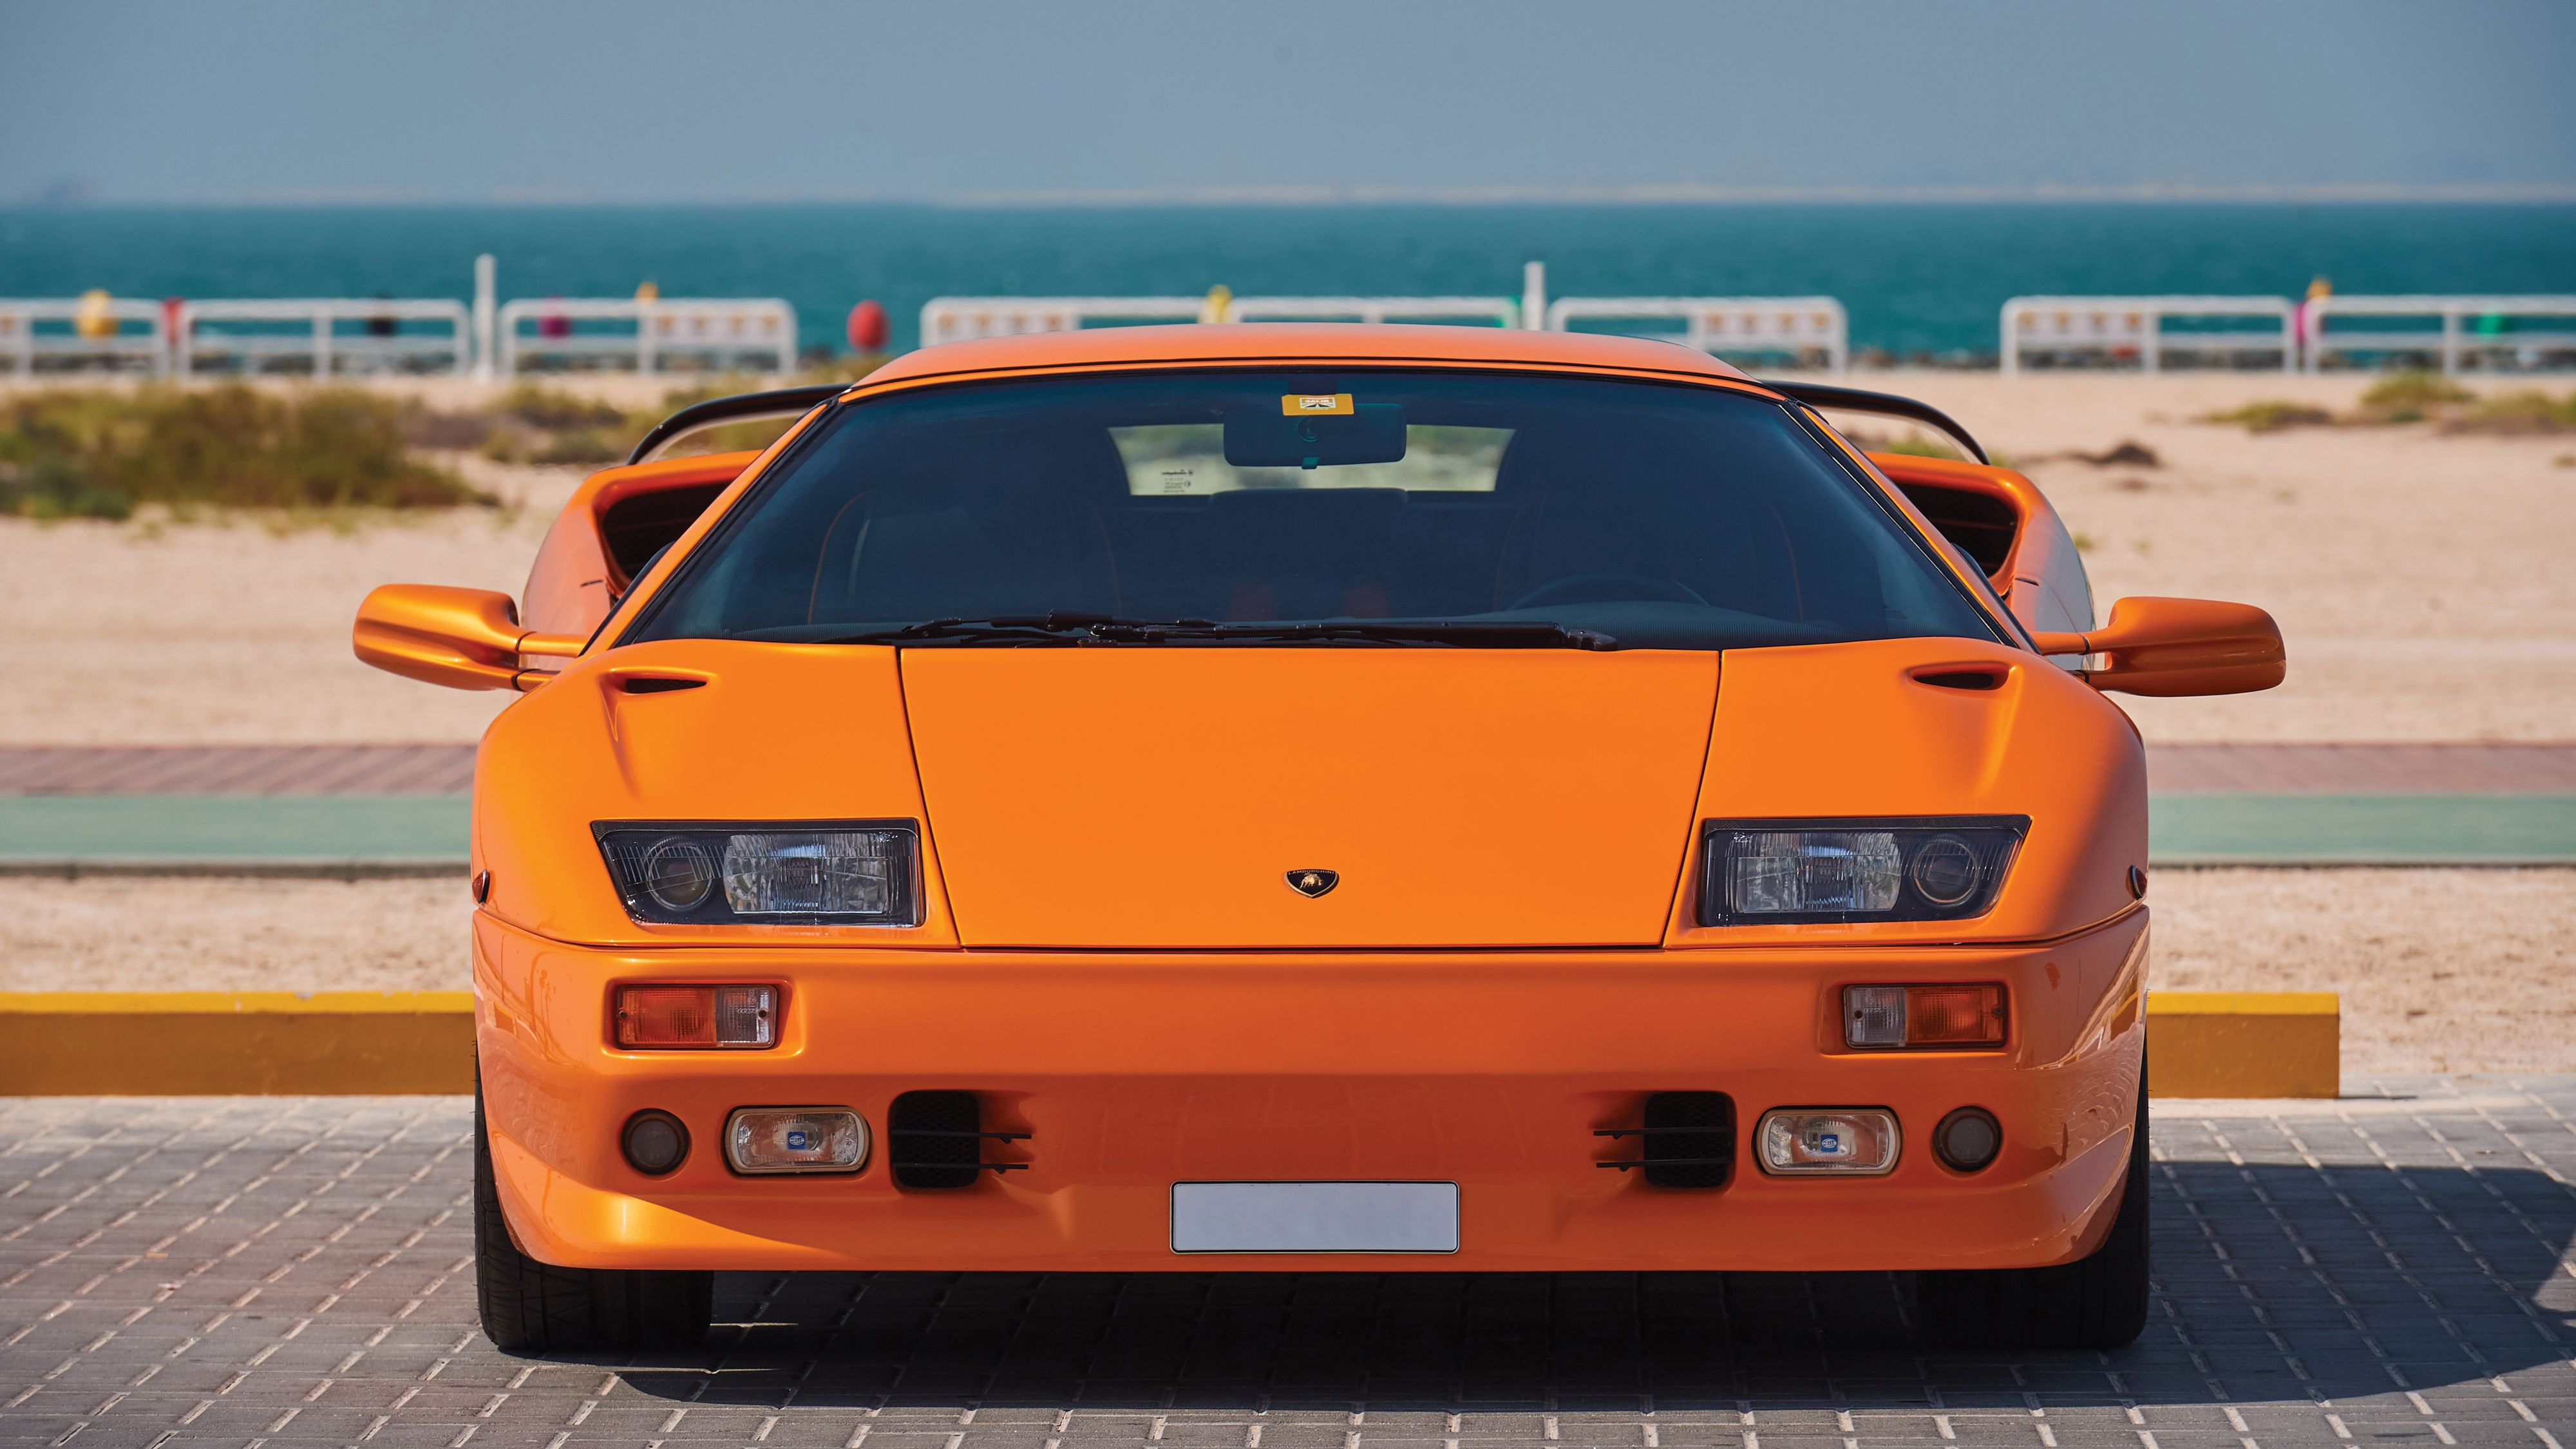 General 4000x2250 Lamborghini Lamborghini Diablo supercars italian cars Roadster orange car vehicle orange cars